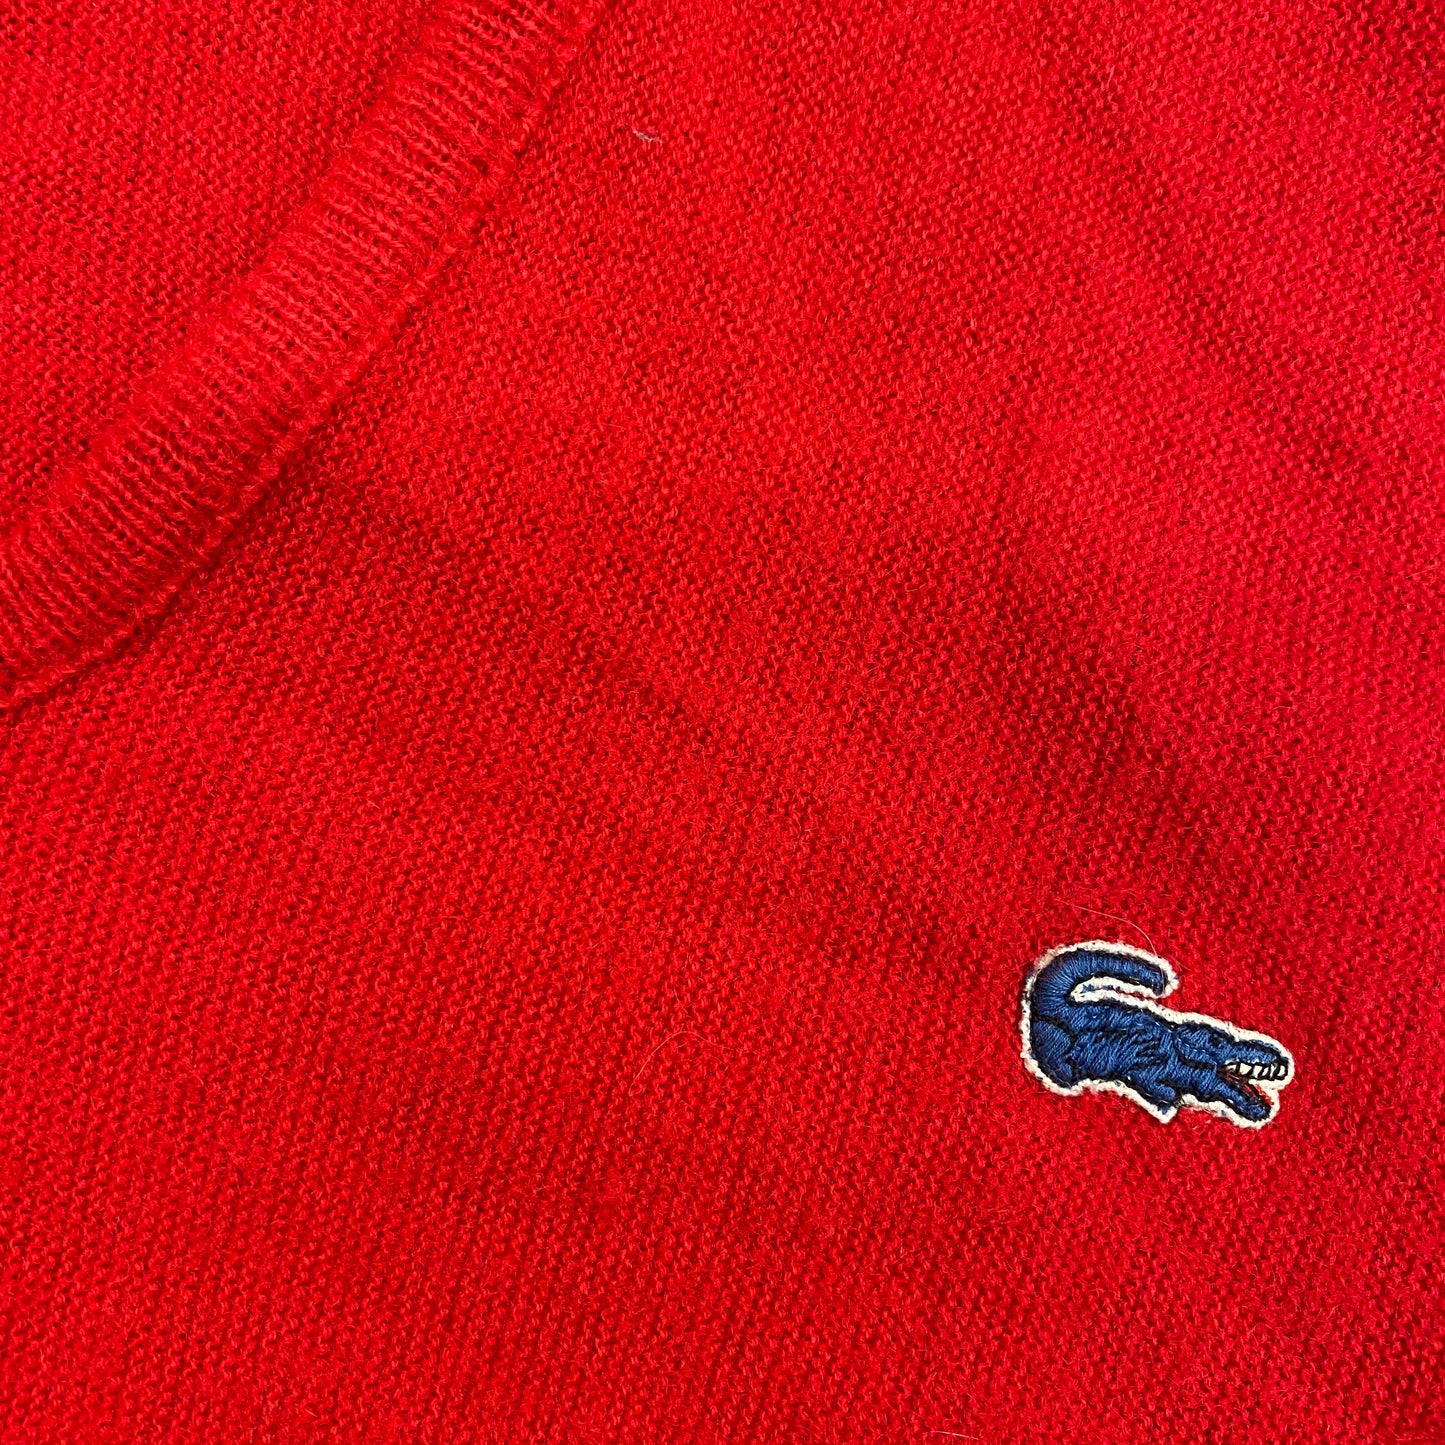 Vintage 1960s Izod of London Red V-Neck Sweater - Size XL